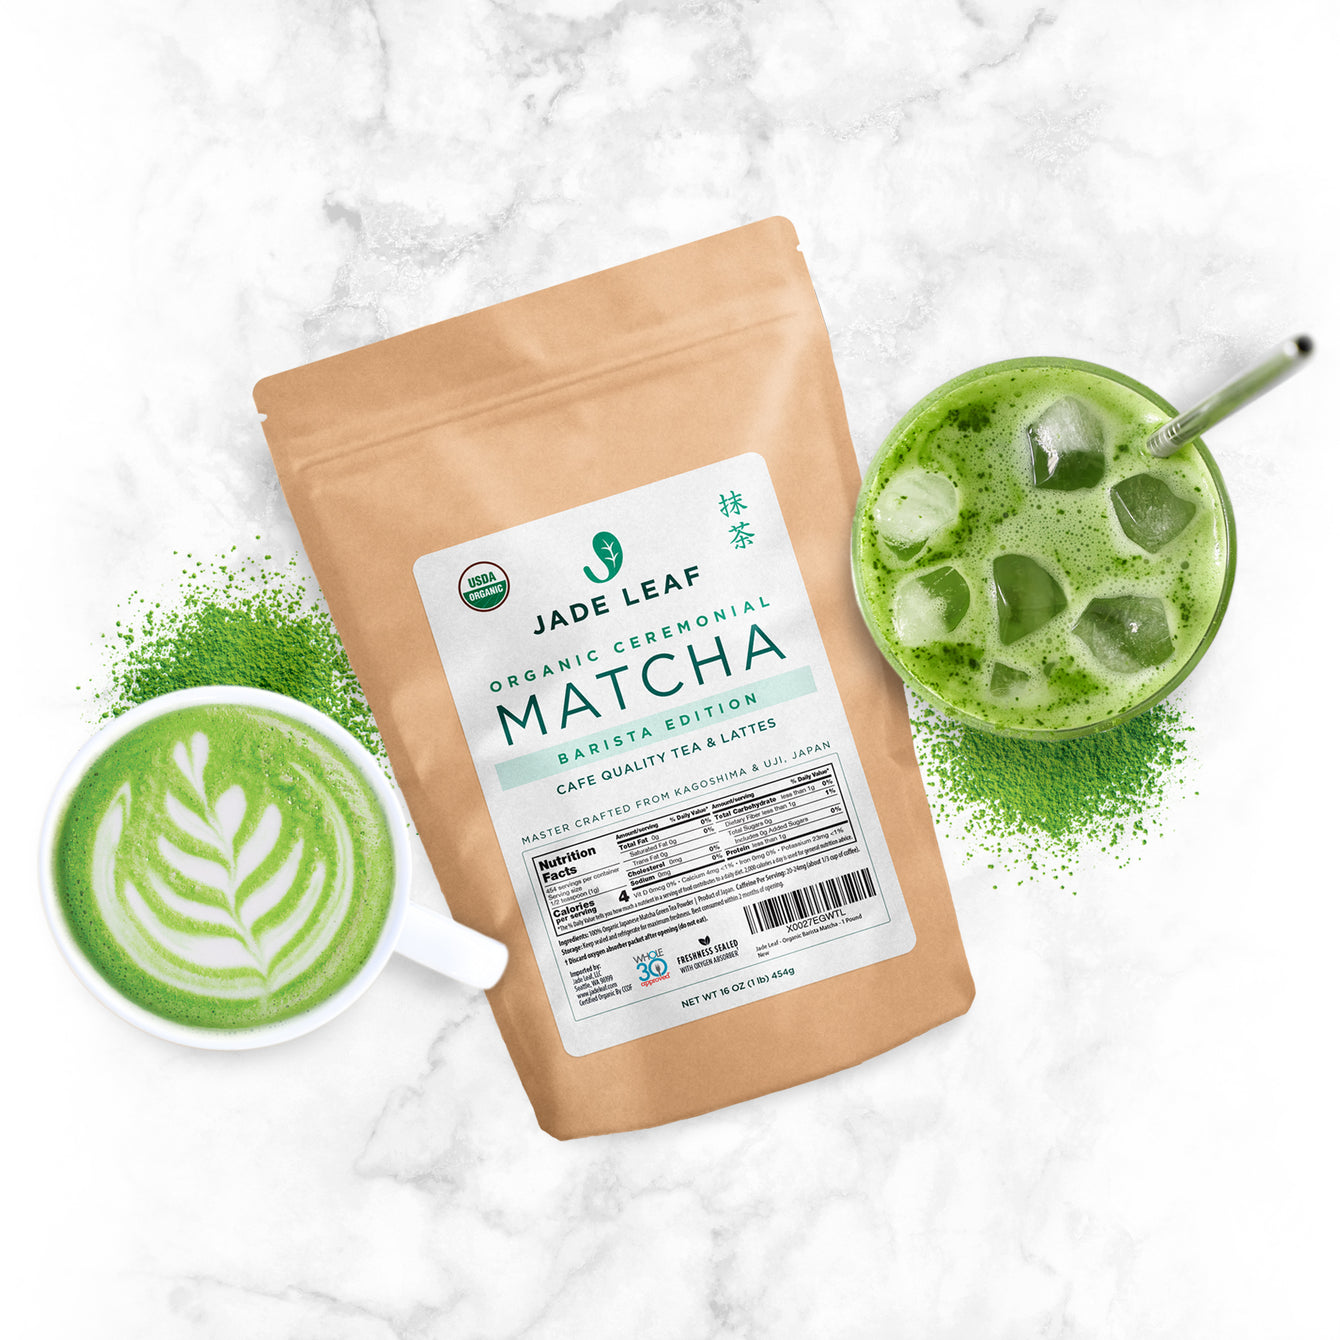 Jade Leaf Organic Ceremonial Teahouse Edition Matcha Powder 1 lb. (454g)